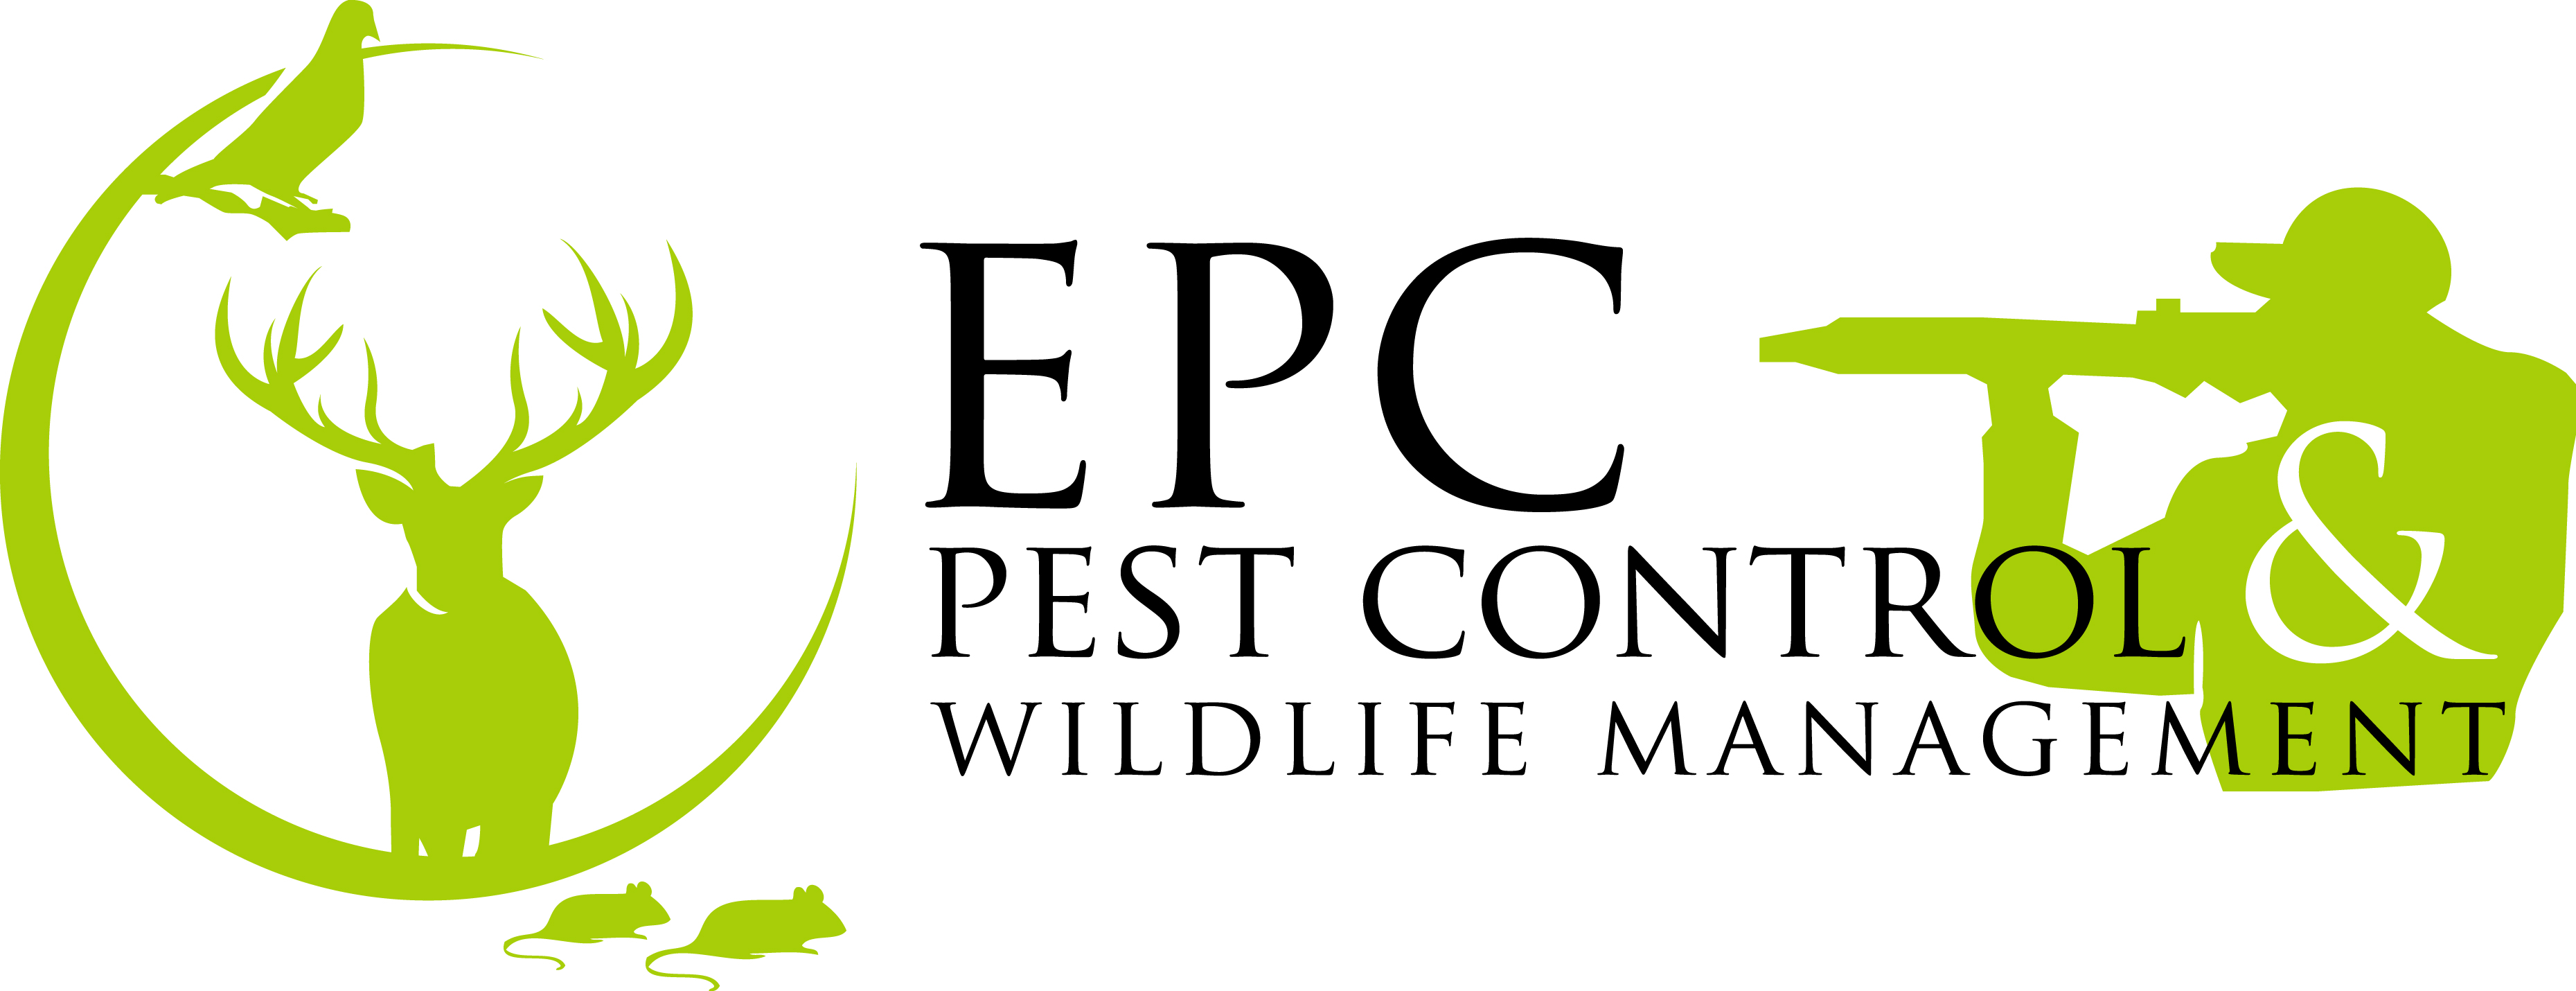 EPC Pest Control